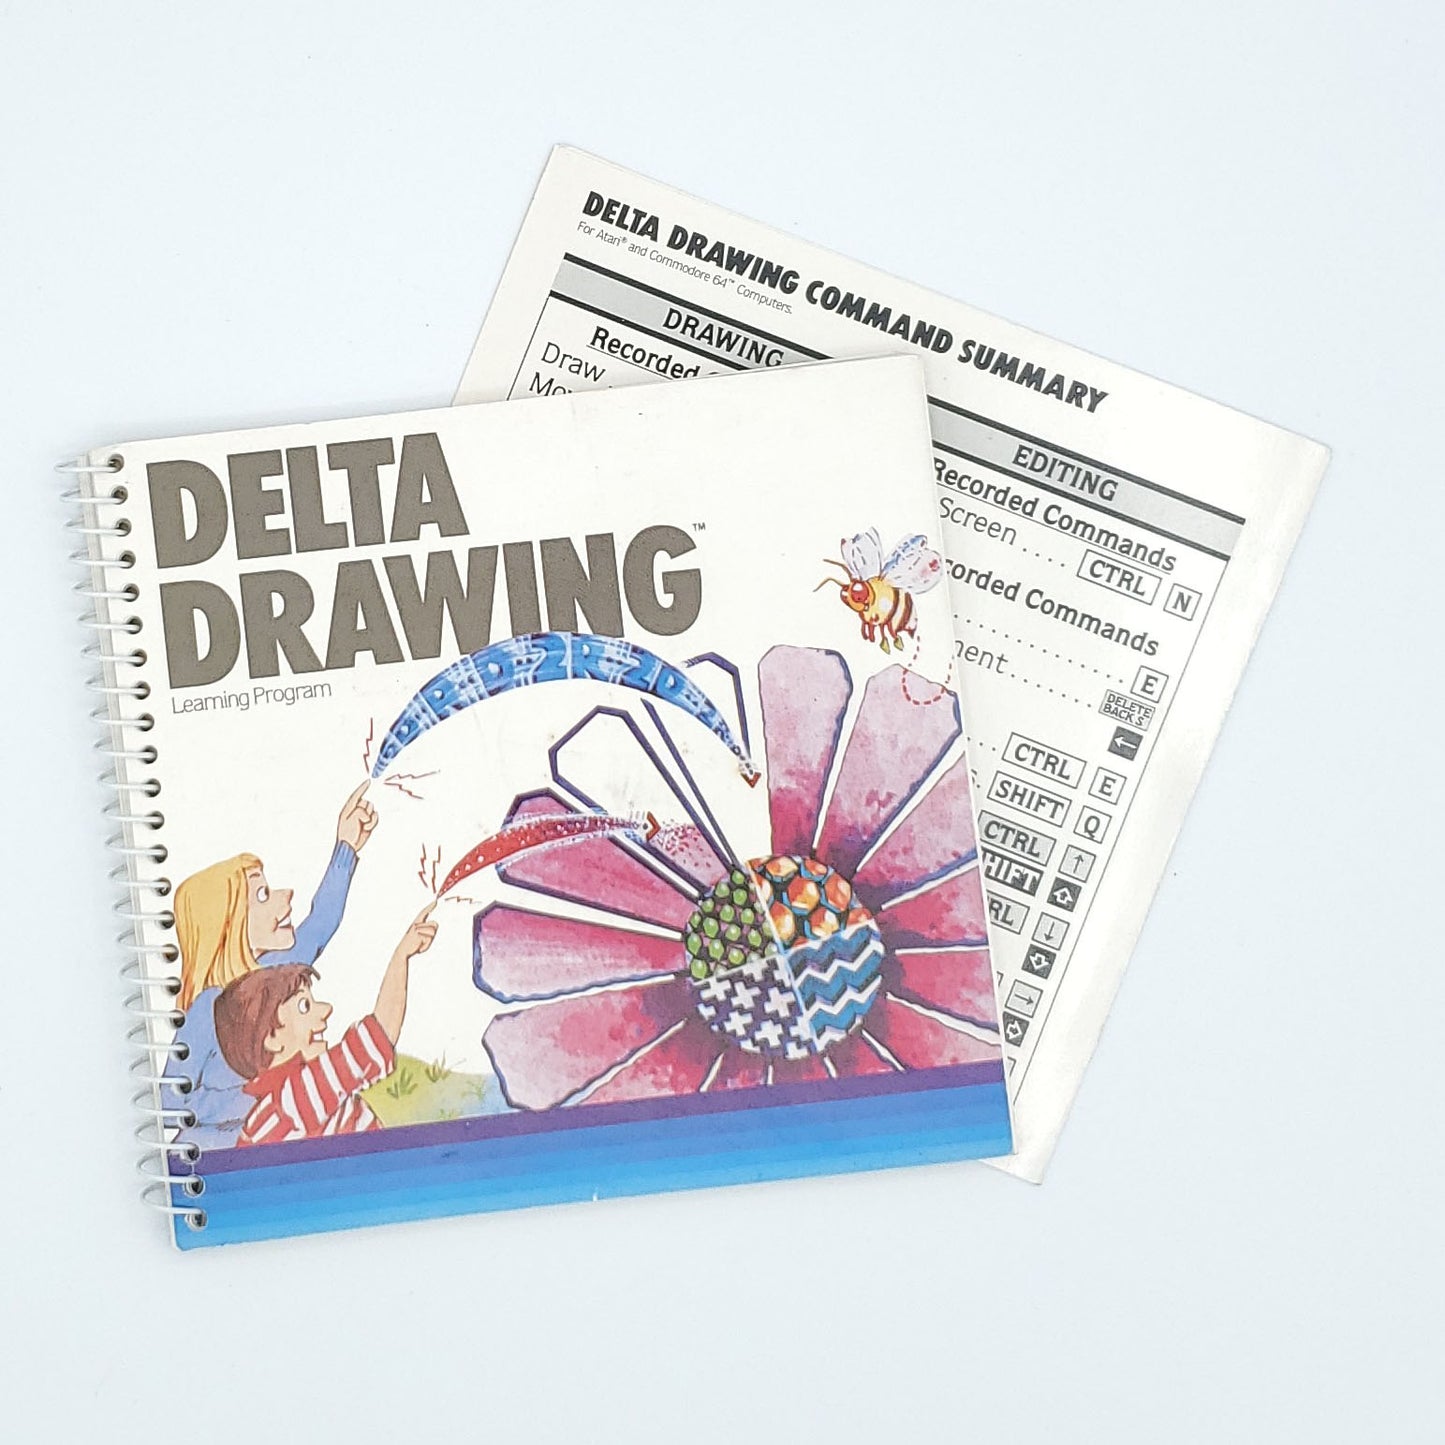 Delta Drawing Cartridge and Manual